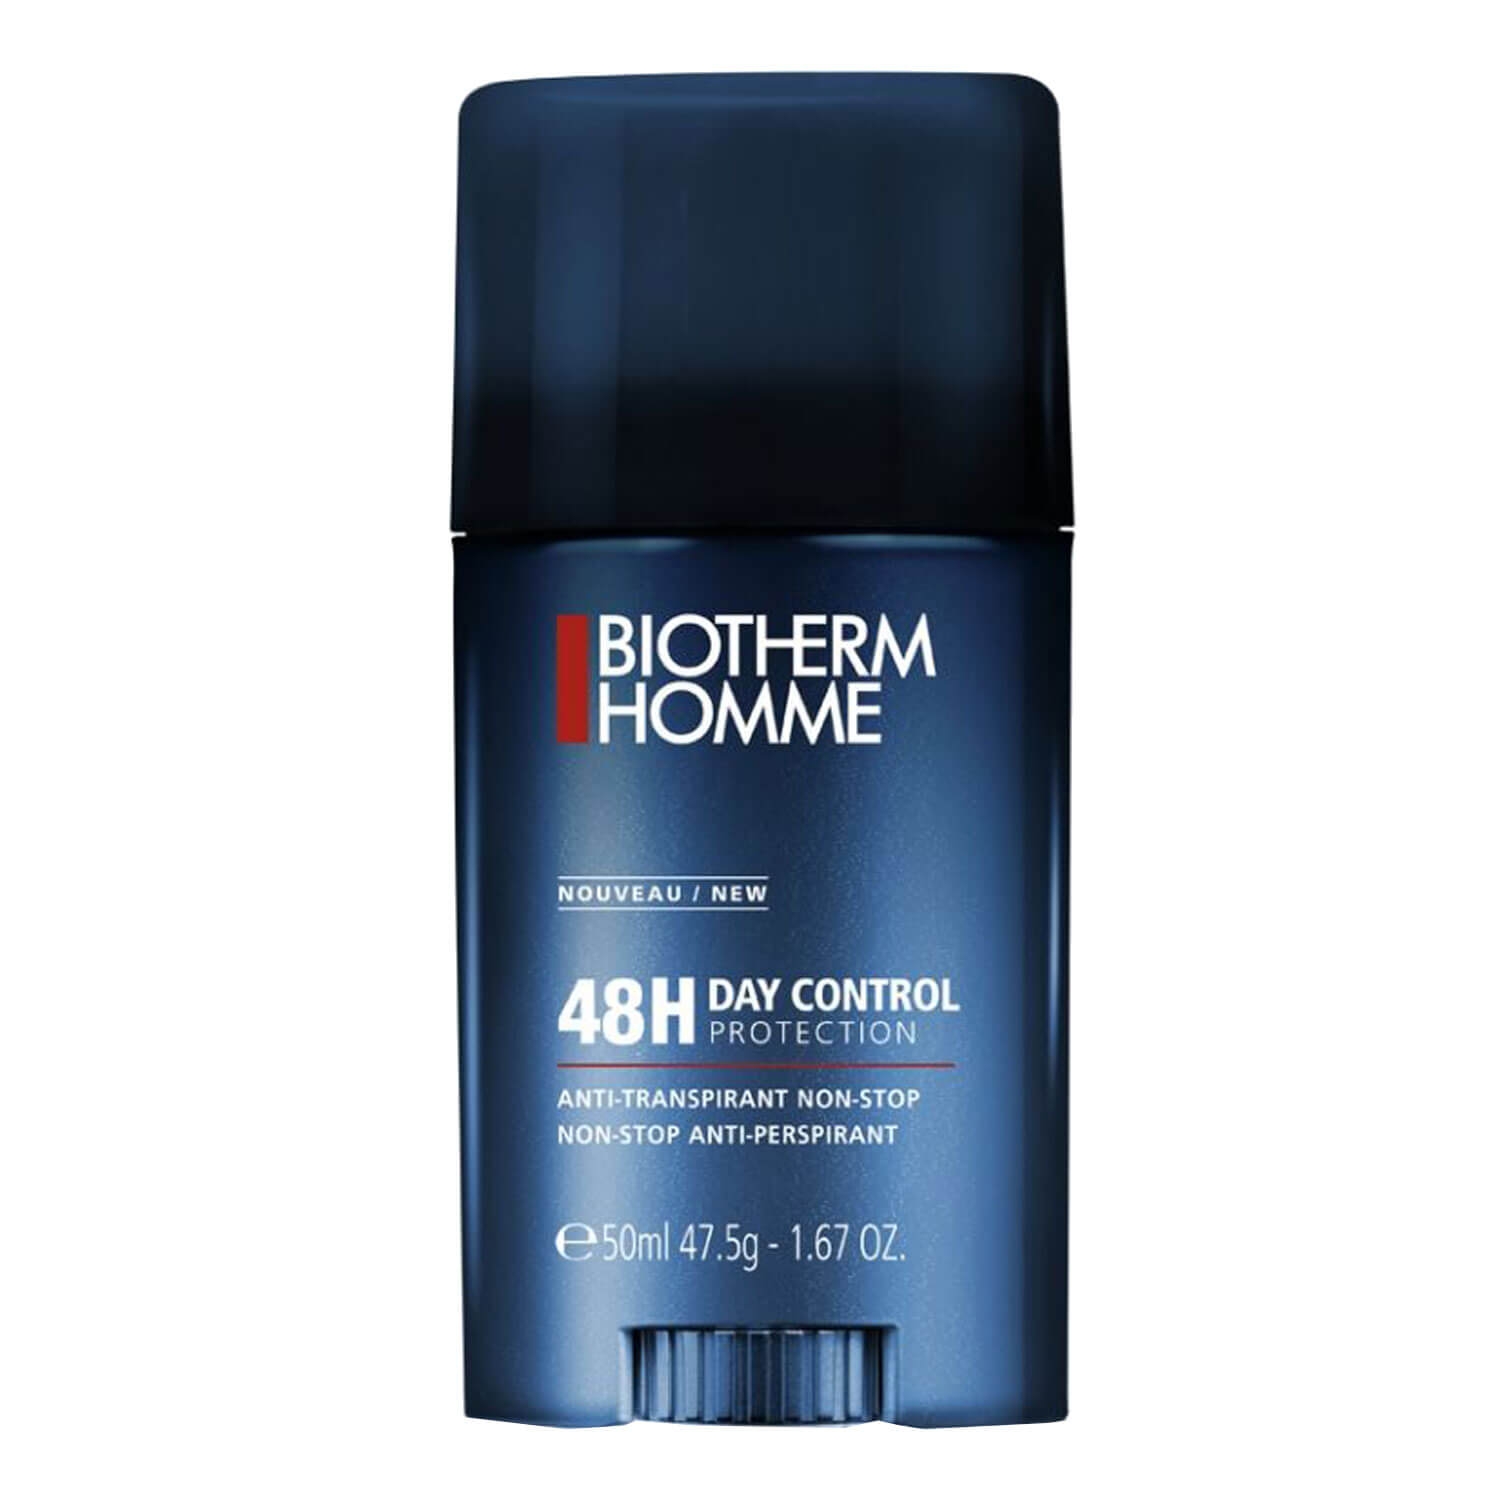 Produktbild von Biotherm Homme - Day Control 48H Extreme Protection Stick